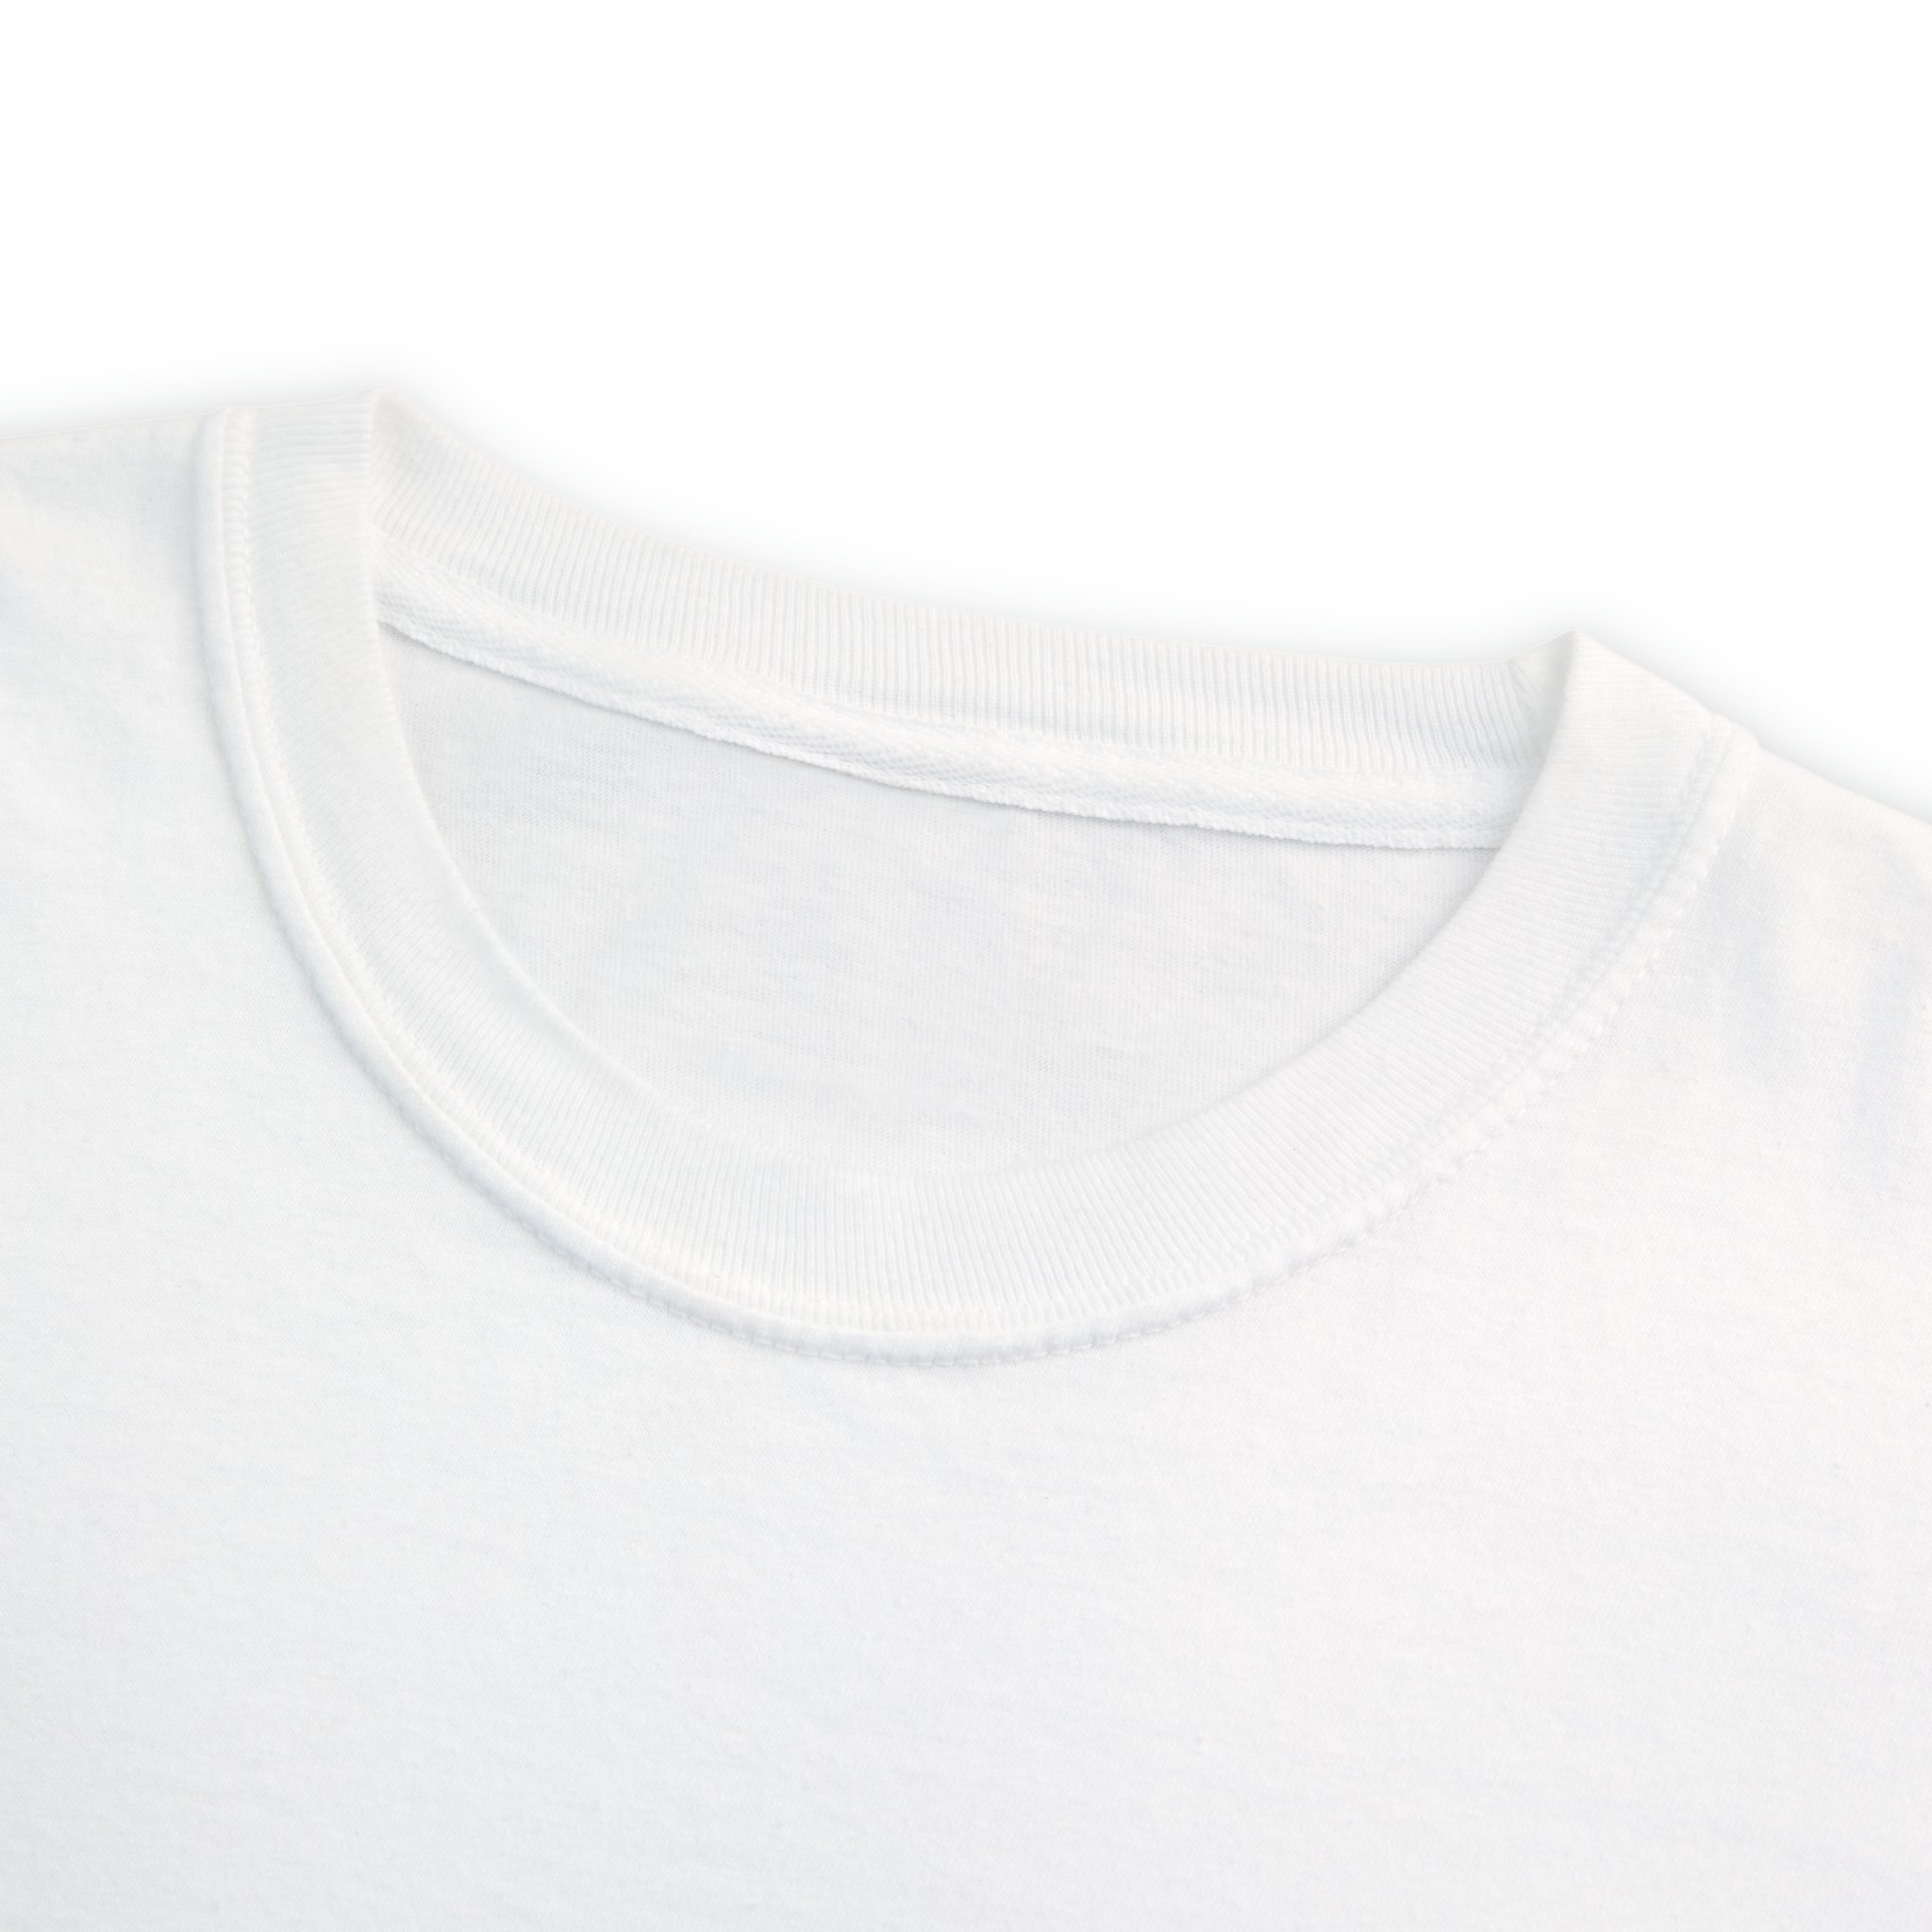 Unisex Pocket T-Shirt Front Collar Closeup (3)